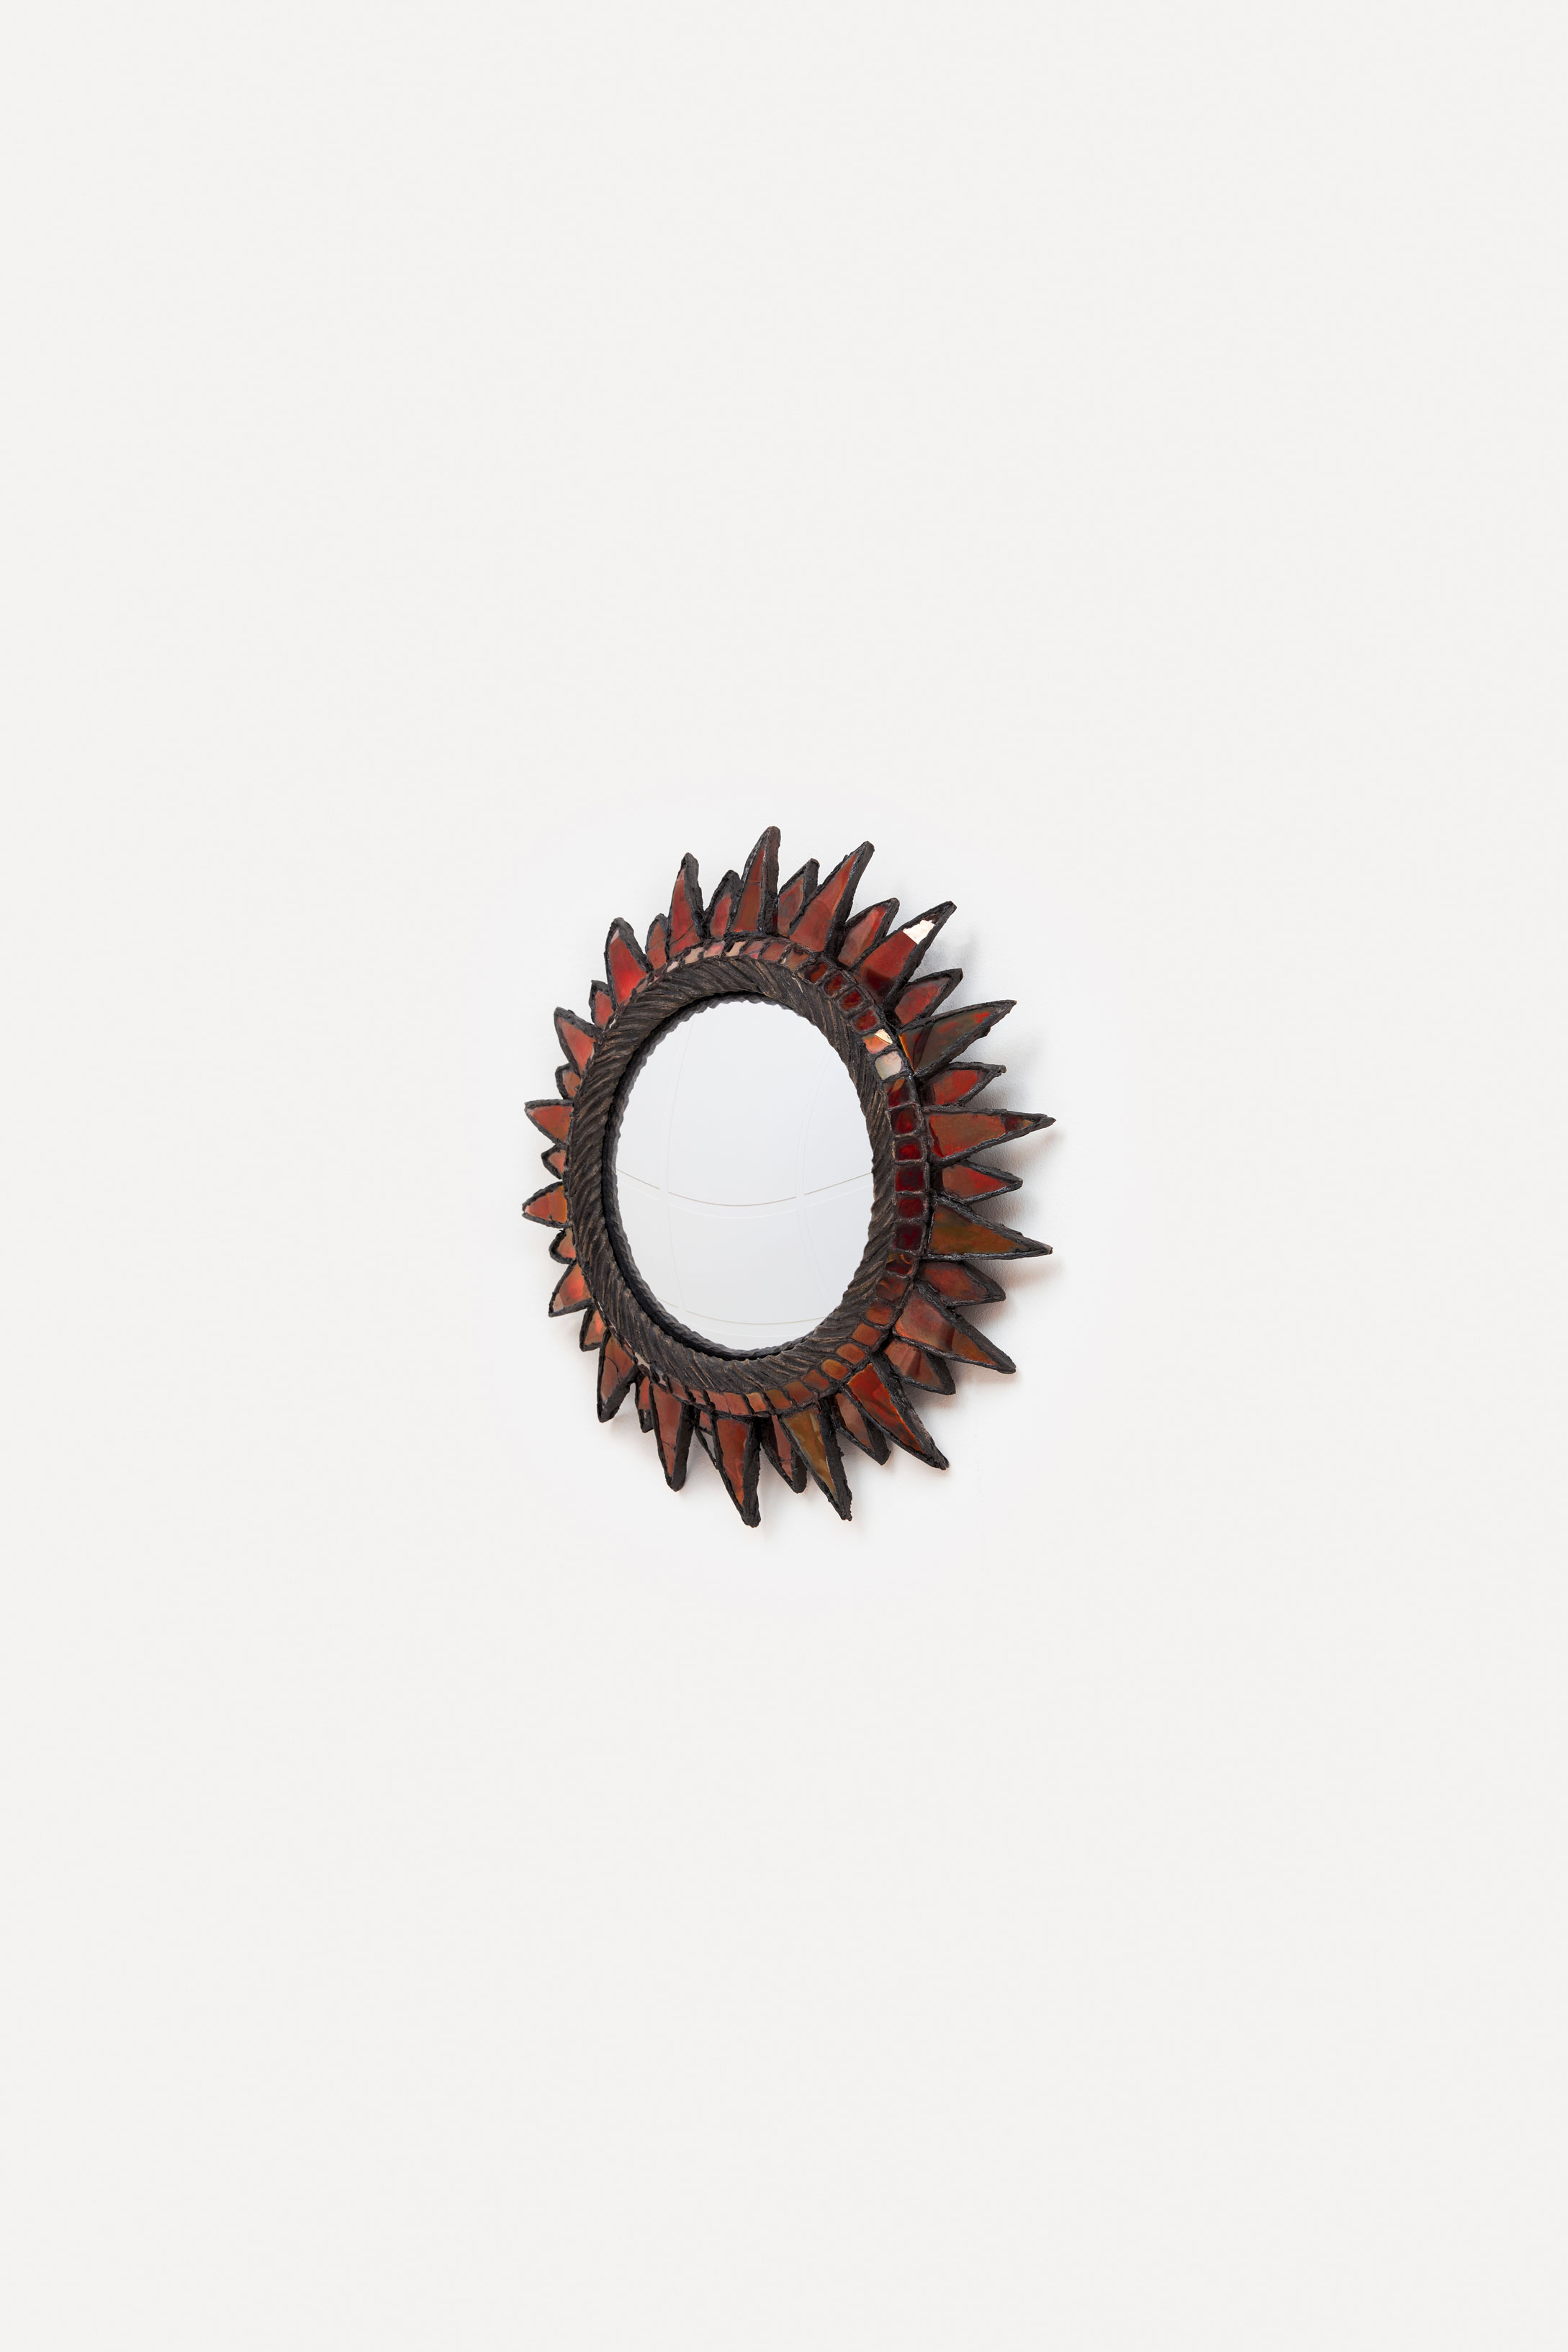 Line Vautrin, “Soleil à pointes” n°1 mirror, vue 01